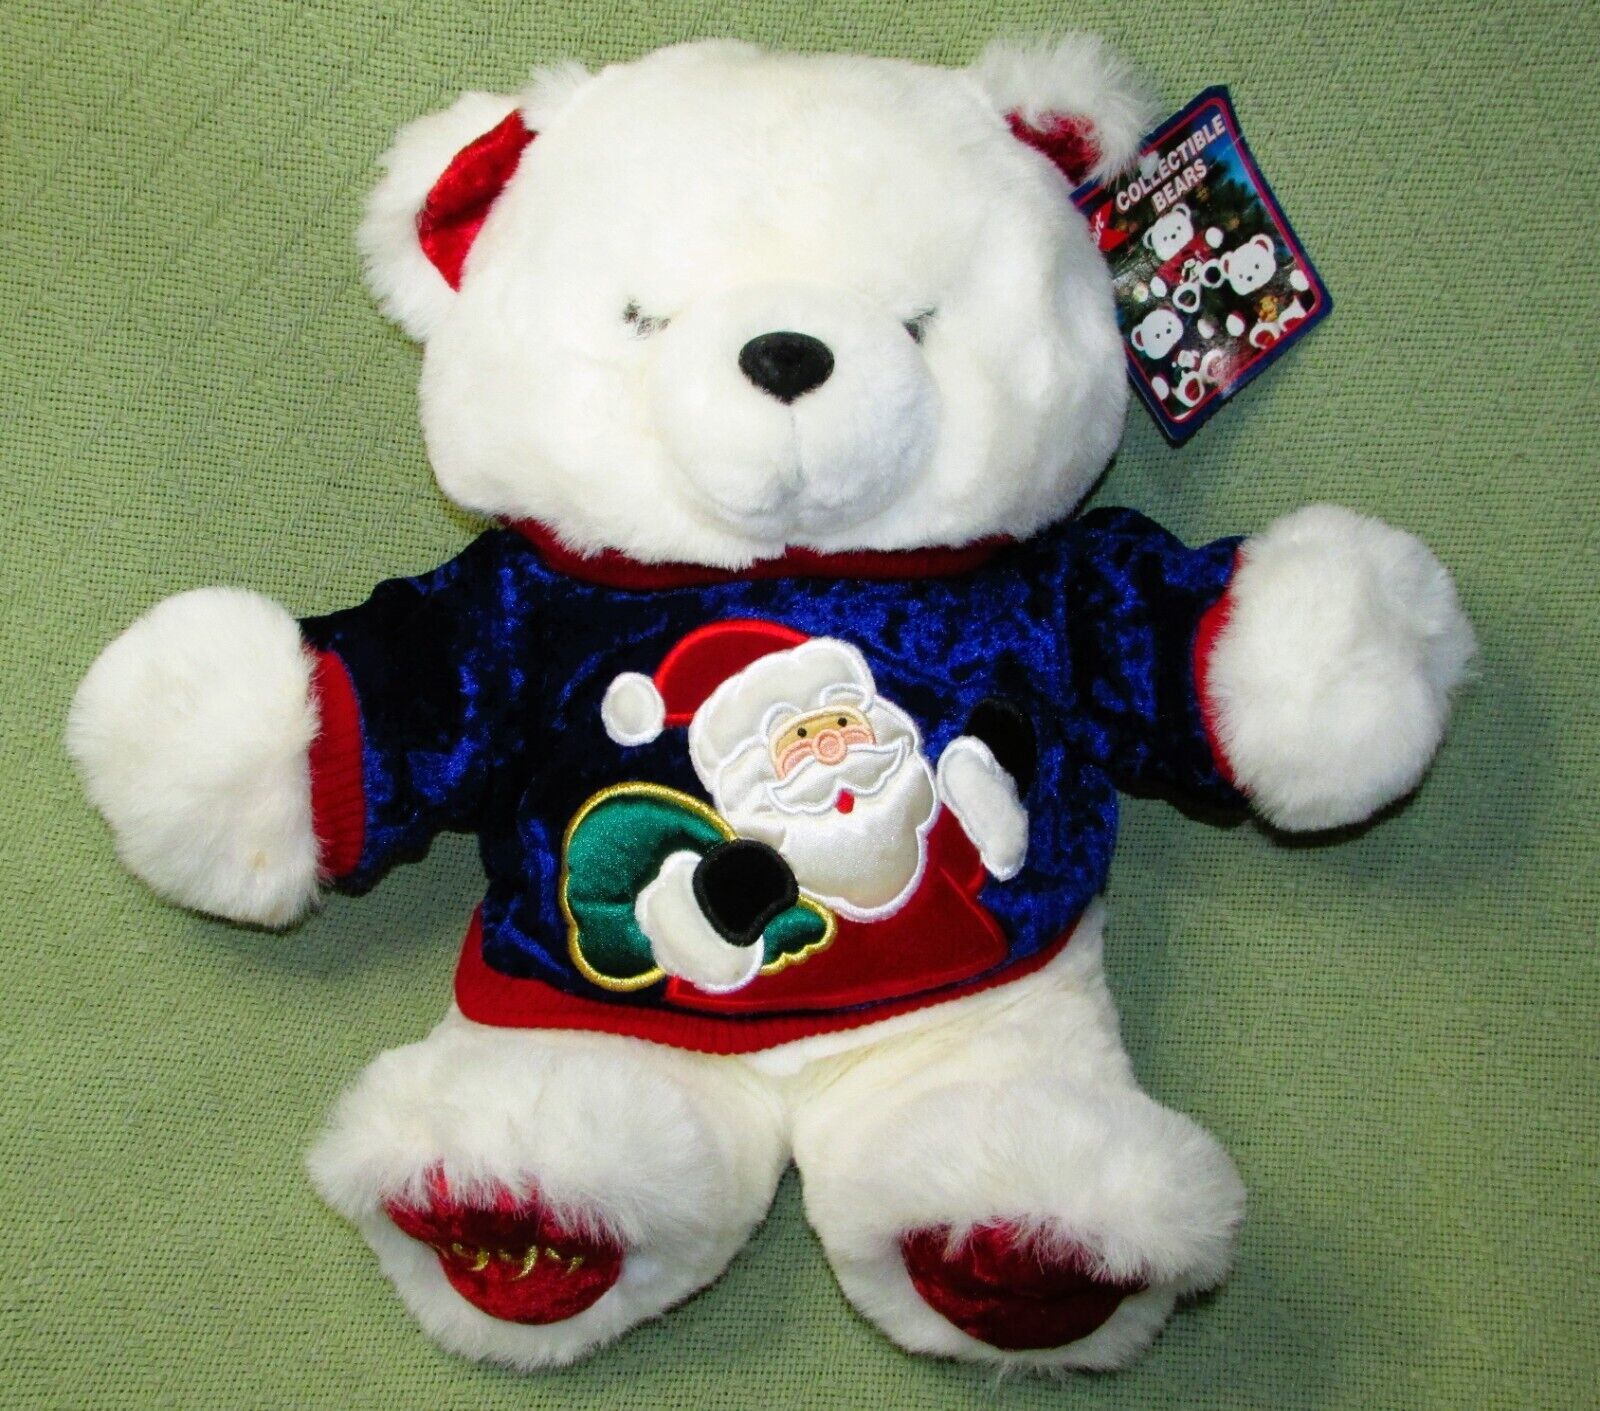 14" 1999 K MART CHRISTMAS TEDDY BEAR MAIN JOY VINTAGE BLUE SHIRT WITH HANG TAGS - $22.05